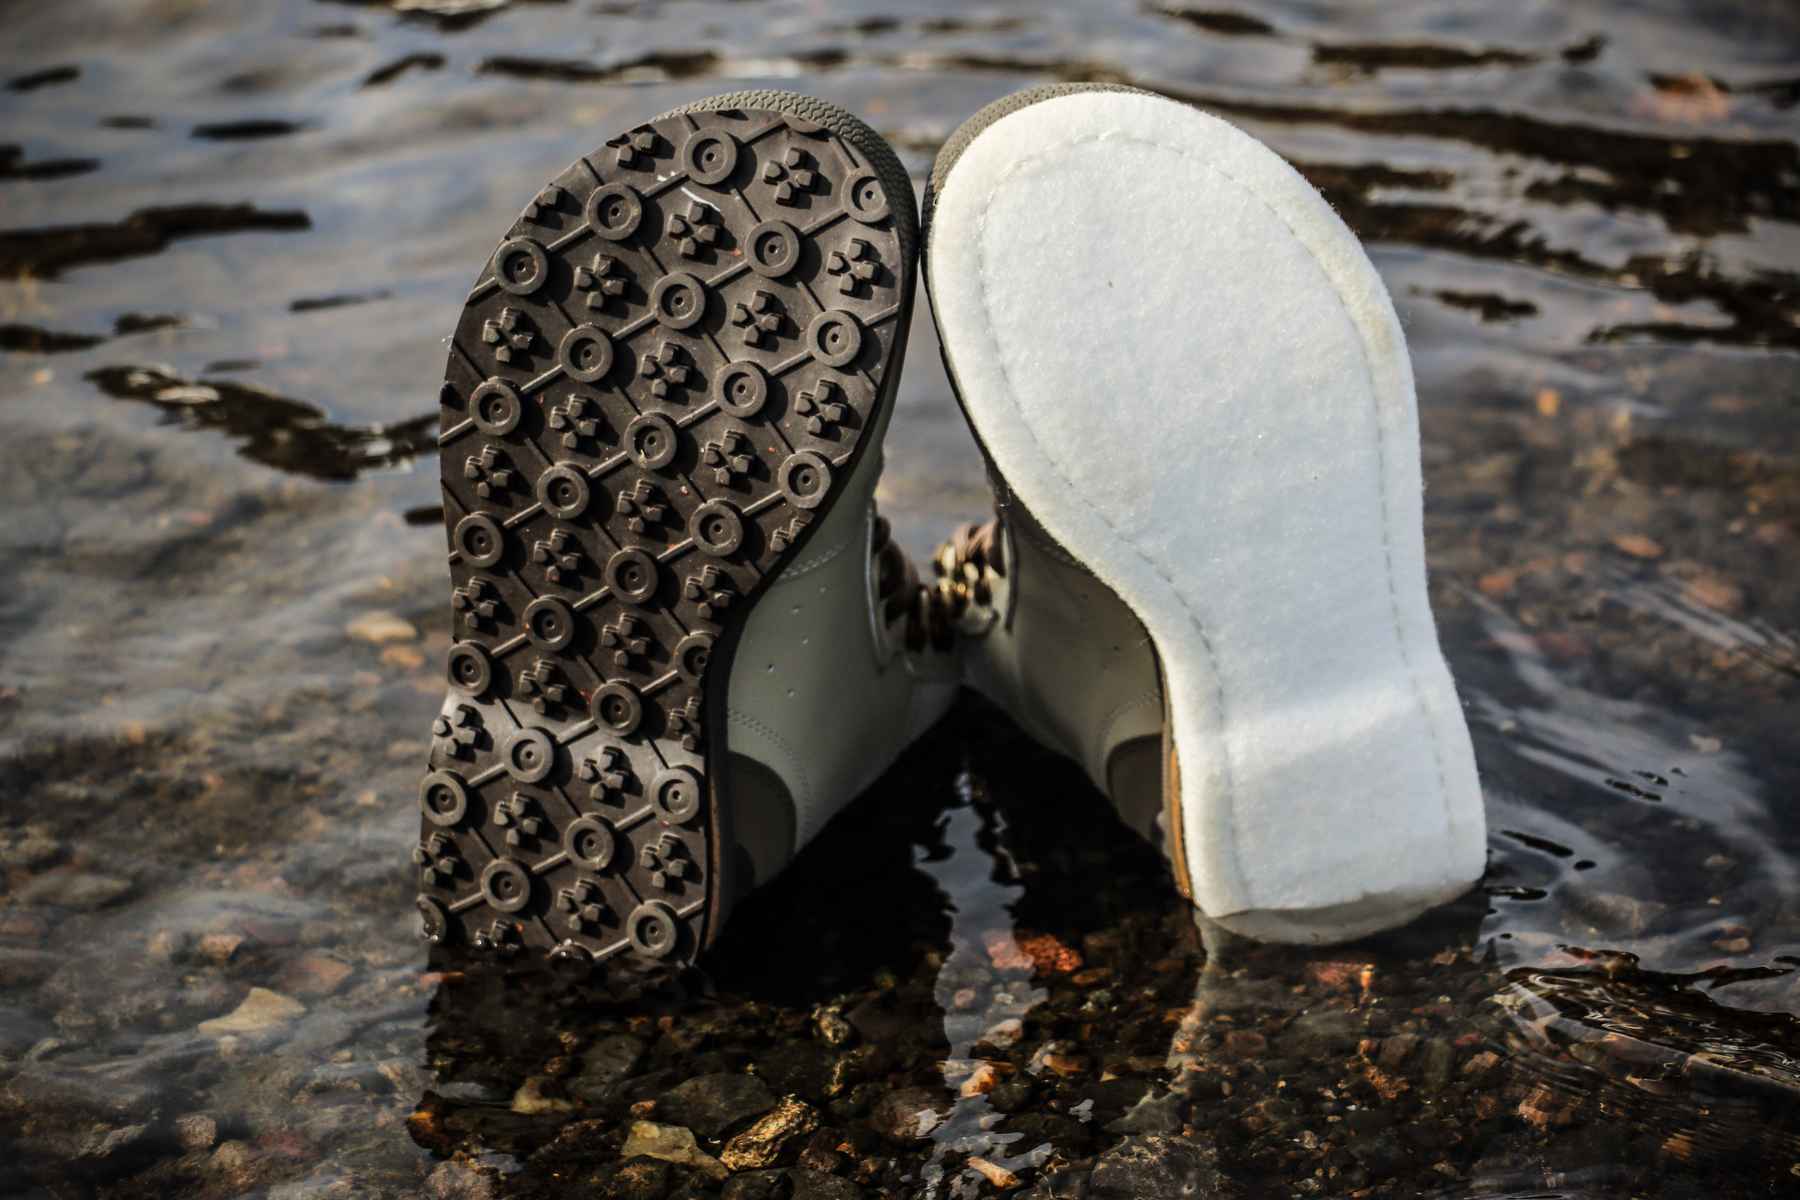 lug sole wading boots